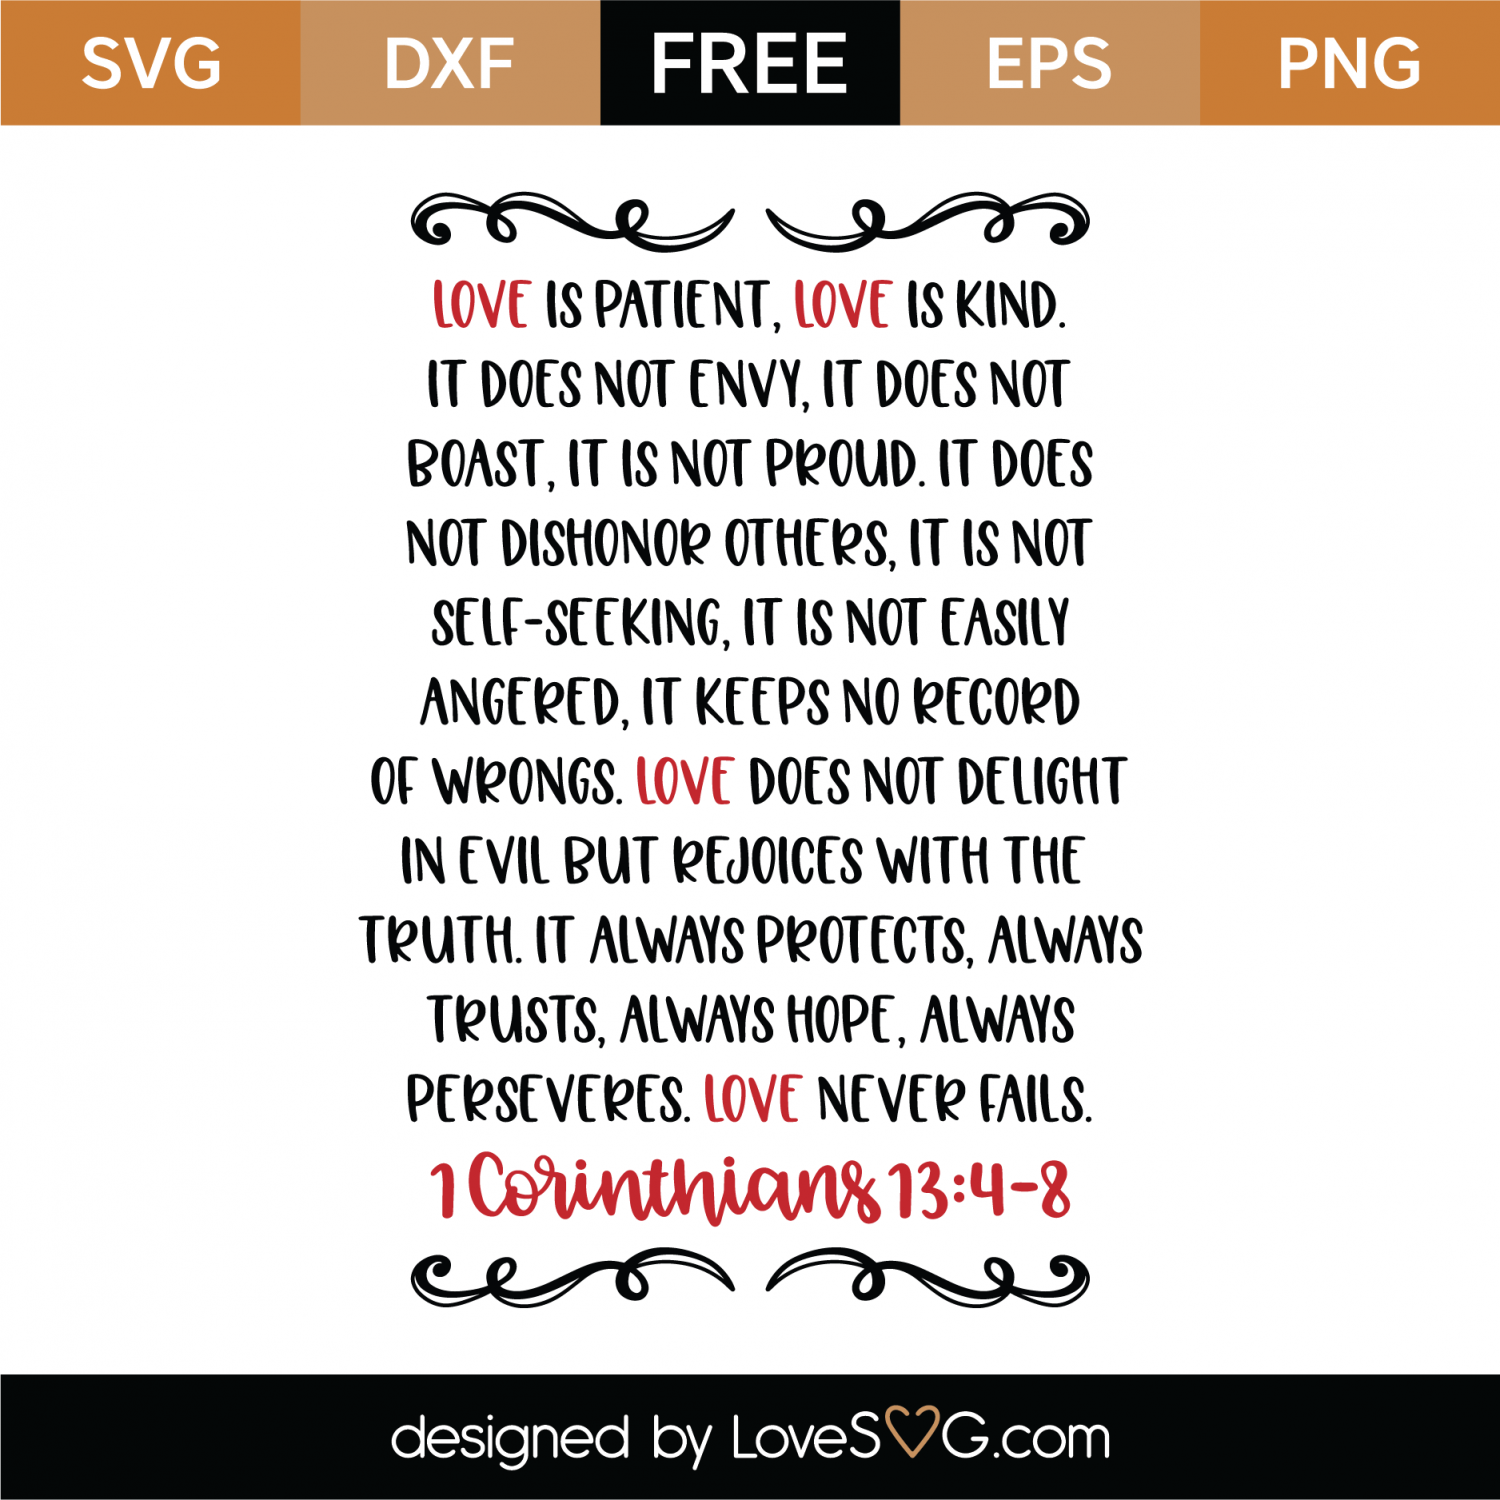 Download Free Love Is Patient Love Is Kind SVG Cut File | Lovesvg.com